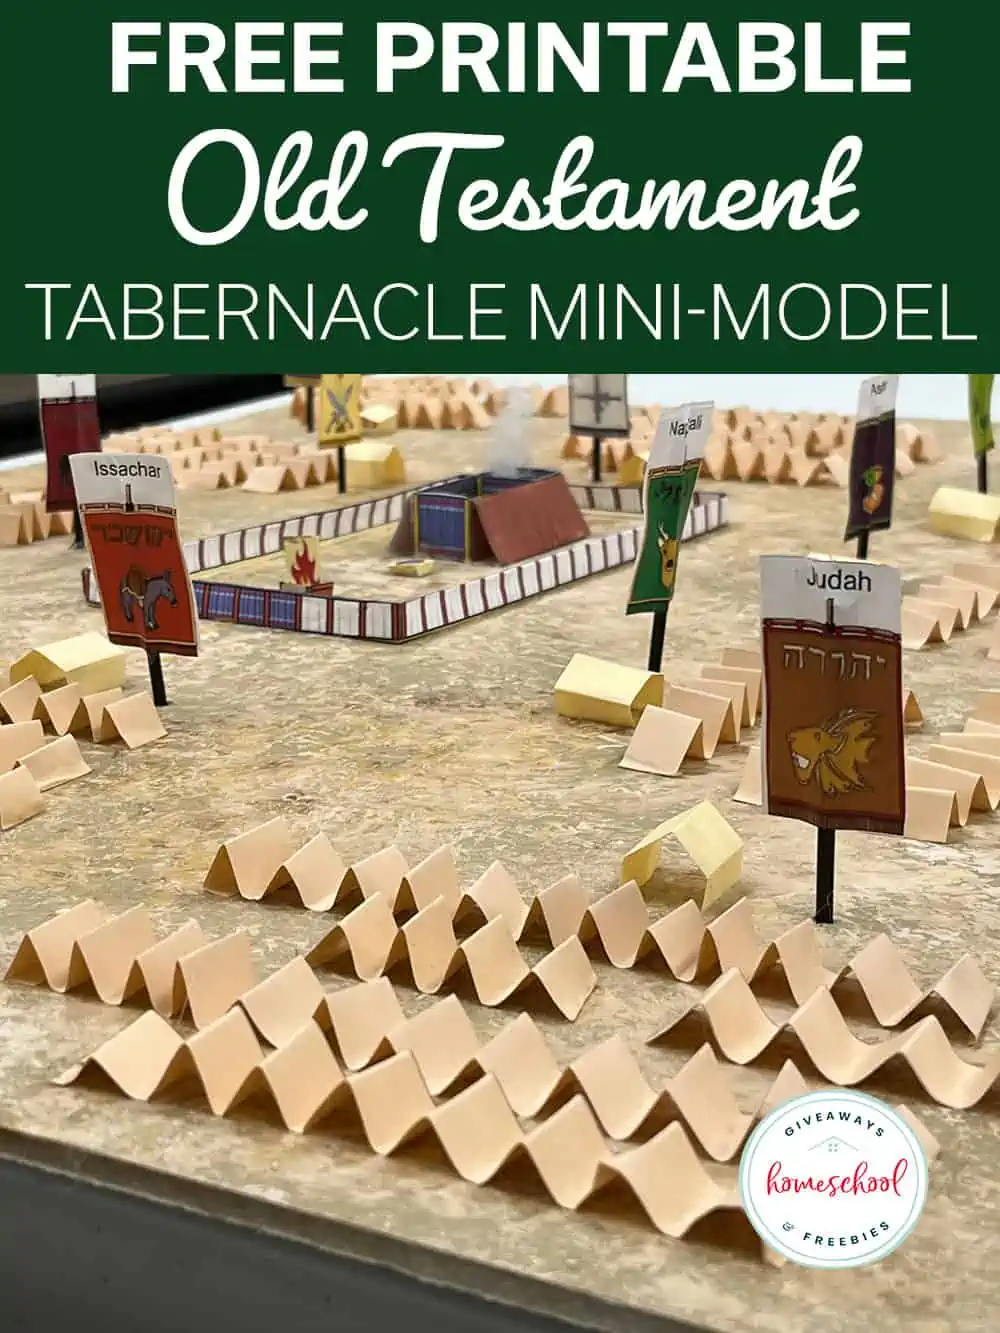 Free Printable Old Testament Tabernacle Mini-Model 